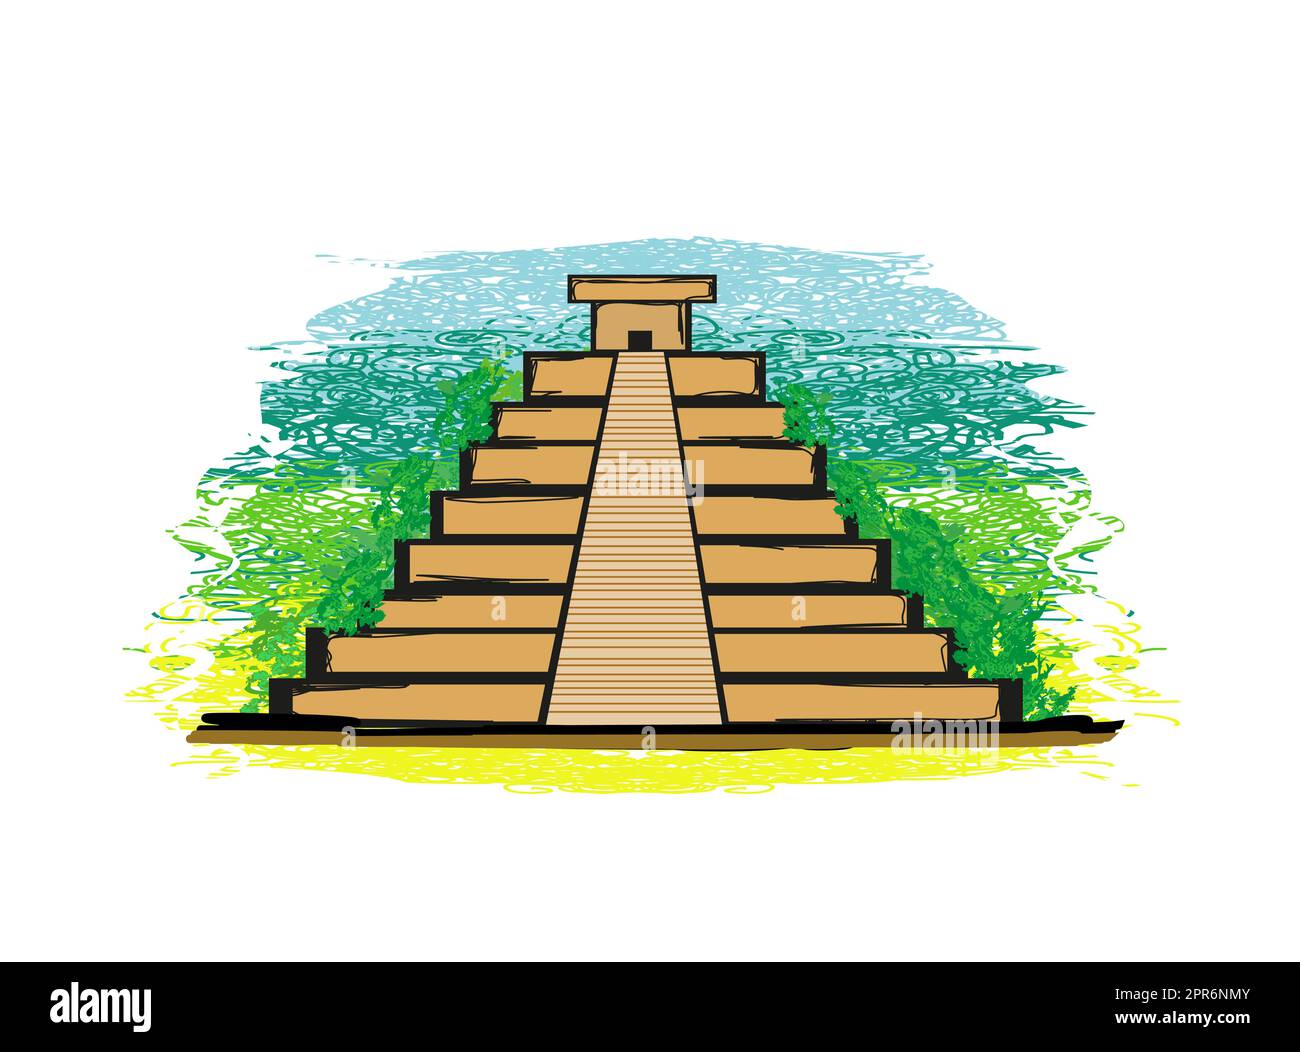 Mayan Pyramid, Chichen-Itza, Mexico - grunge abstract banner Stock Photo